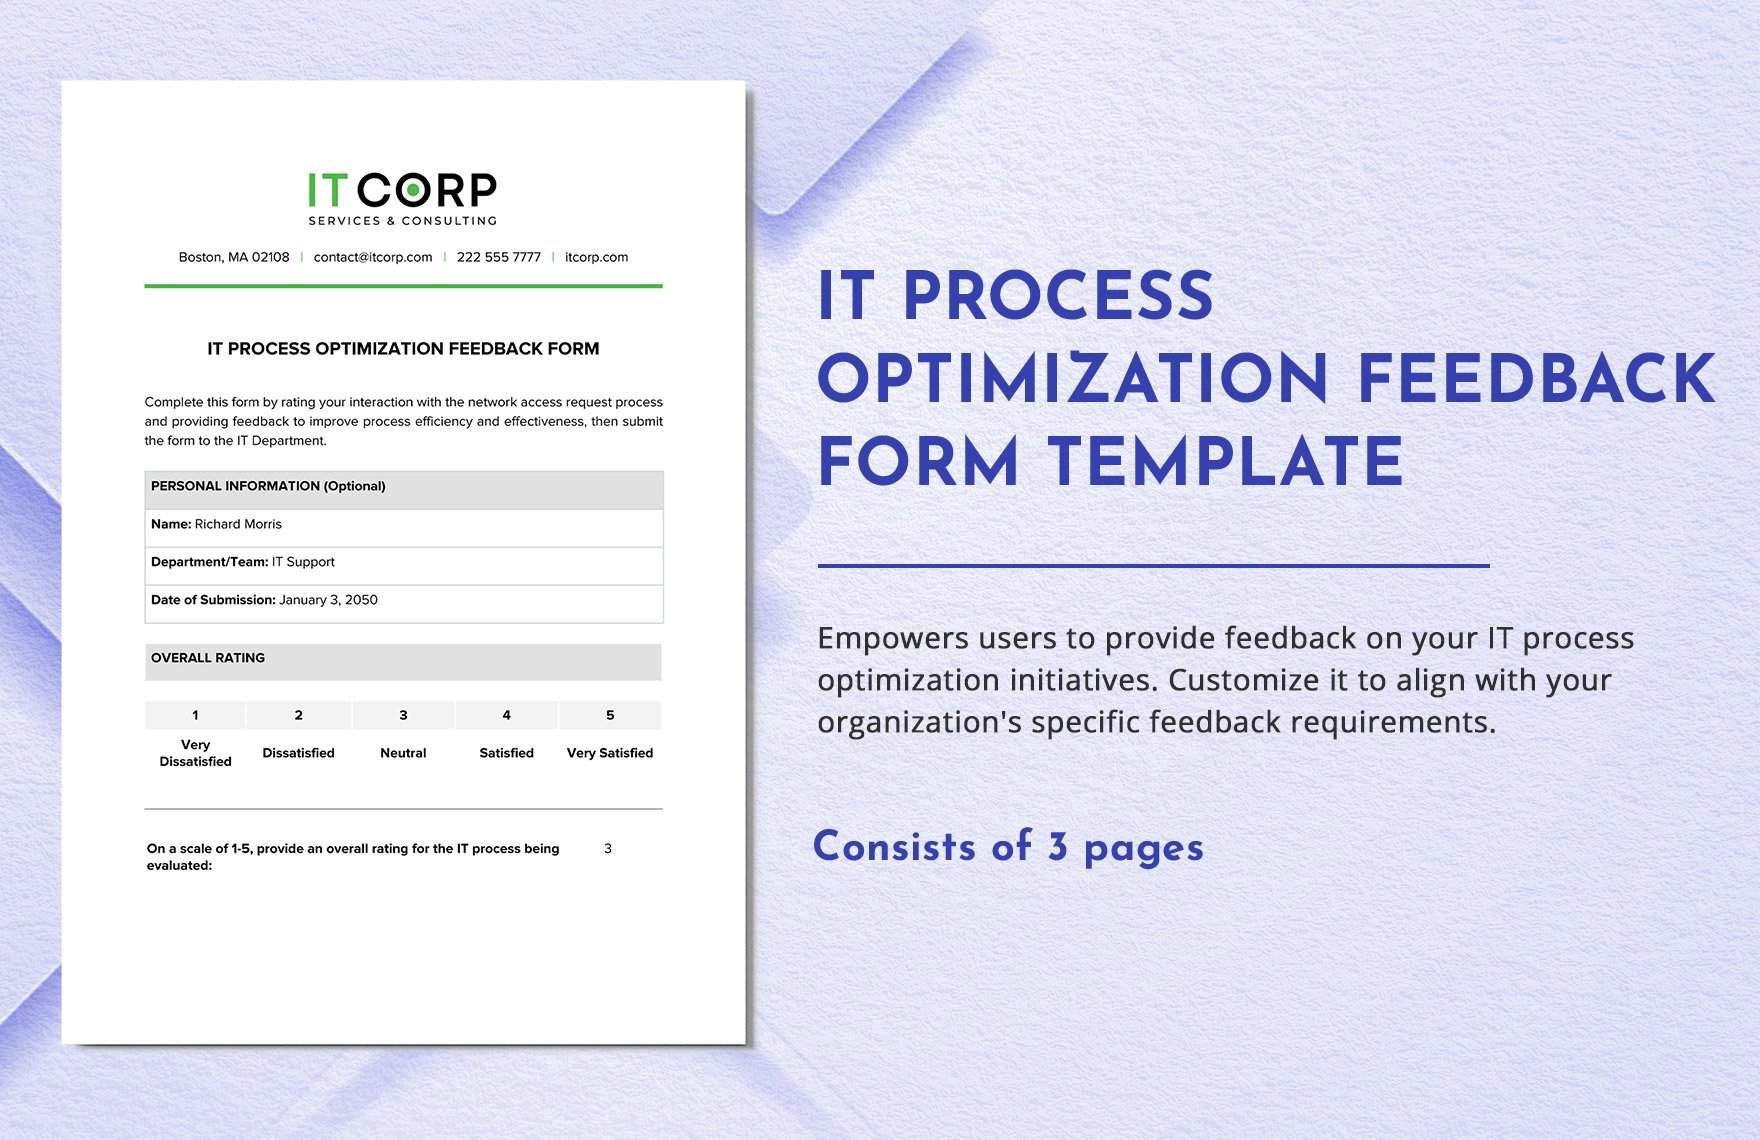 IT Process Optimization Feedback Form Template